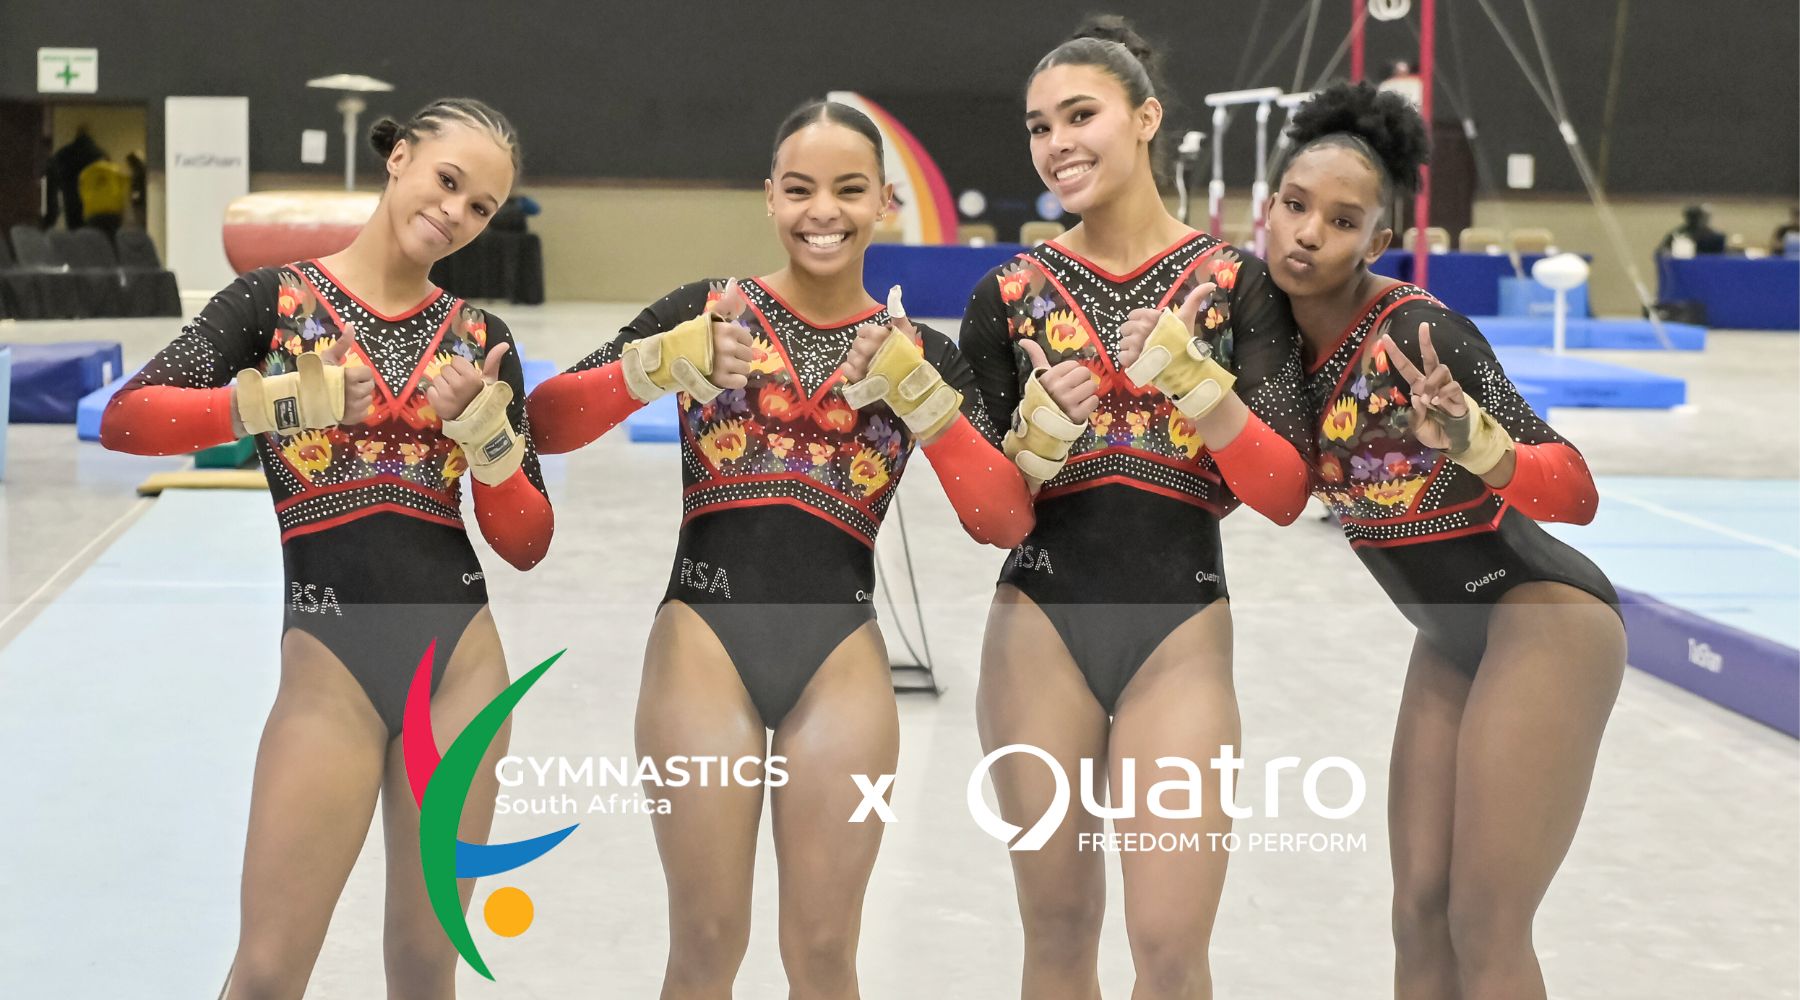 Quatro Gymnastics and Gymnastics South Africa Join Forces in New Partnership - Quatro Gymnastics UK